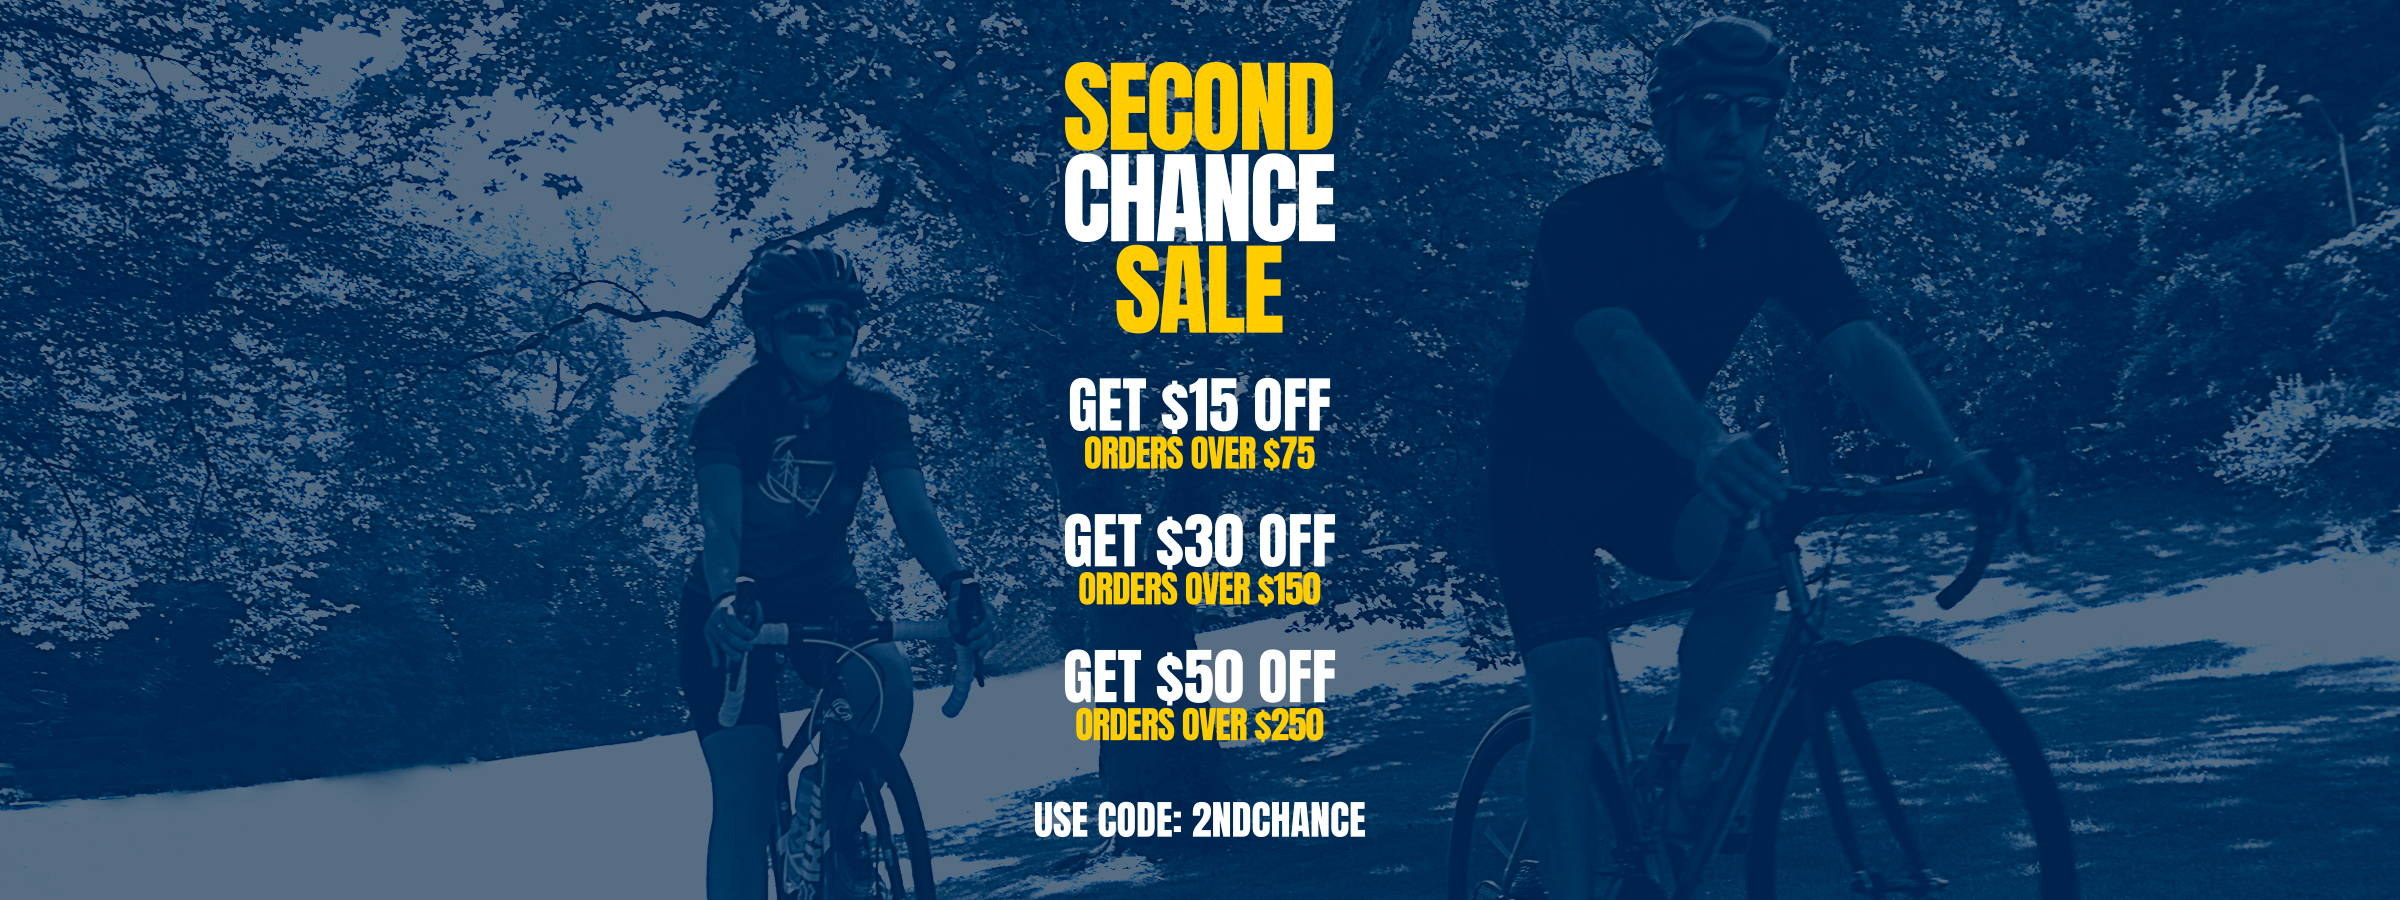 Second chance sale